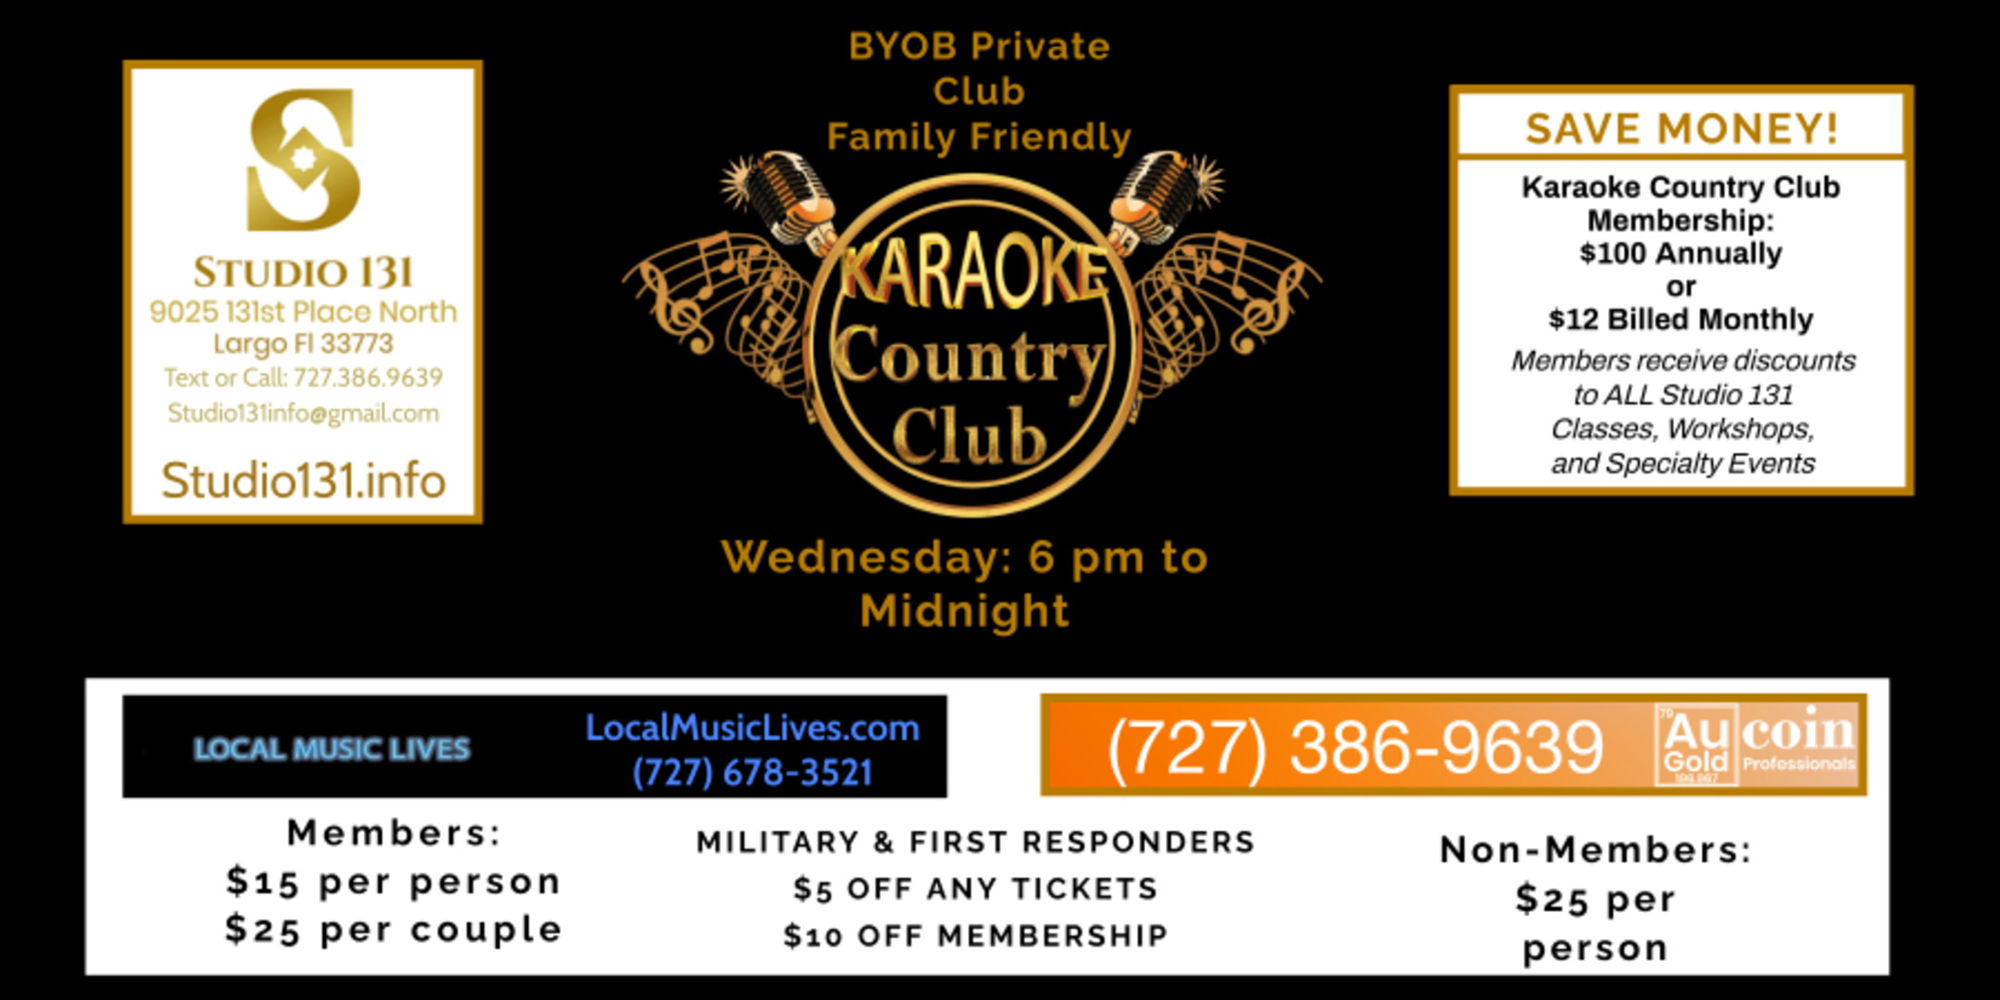 Karaoke Country Club promotional image